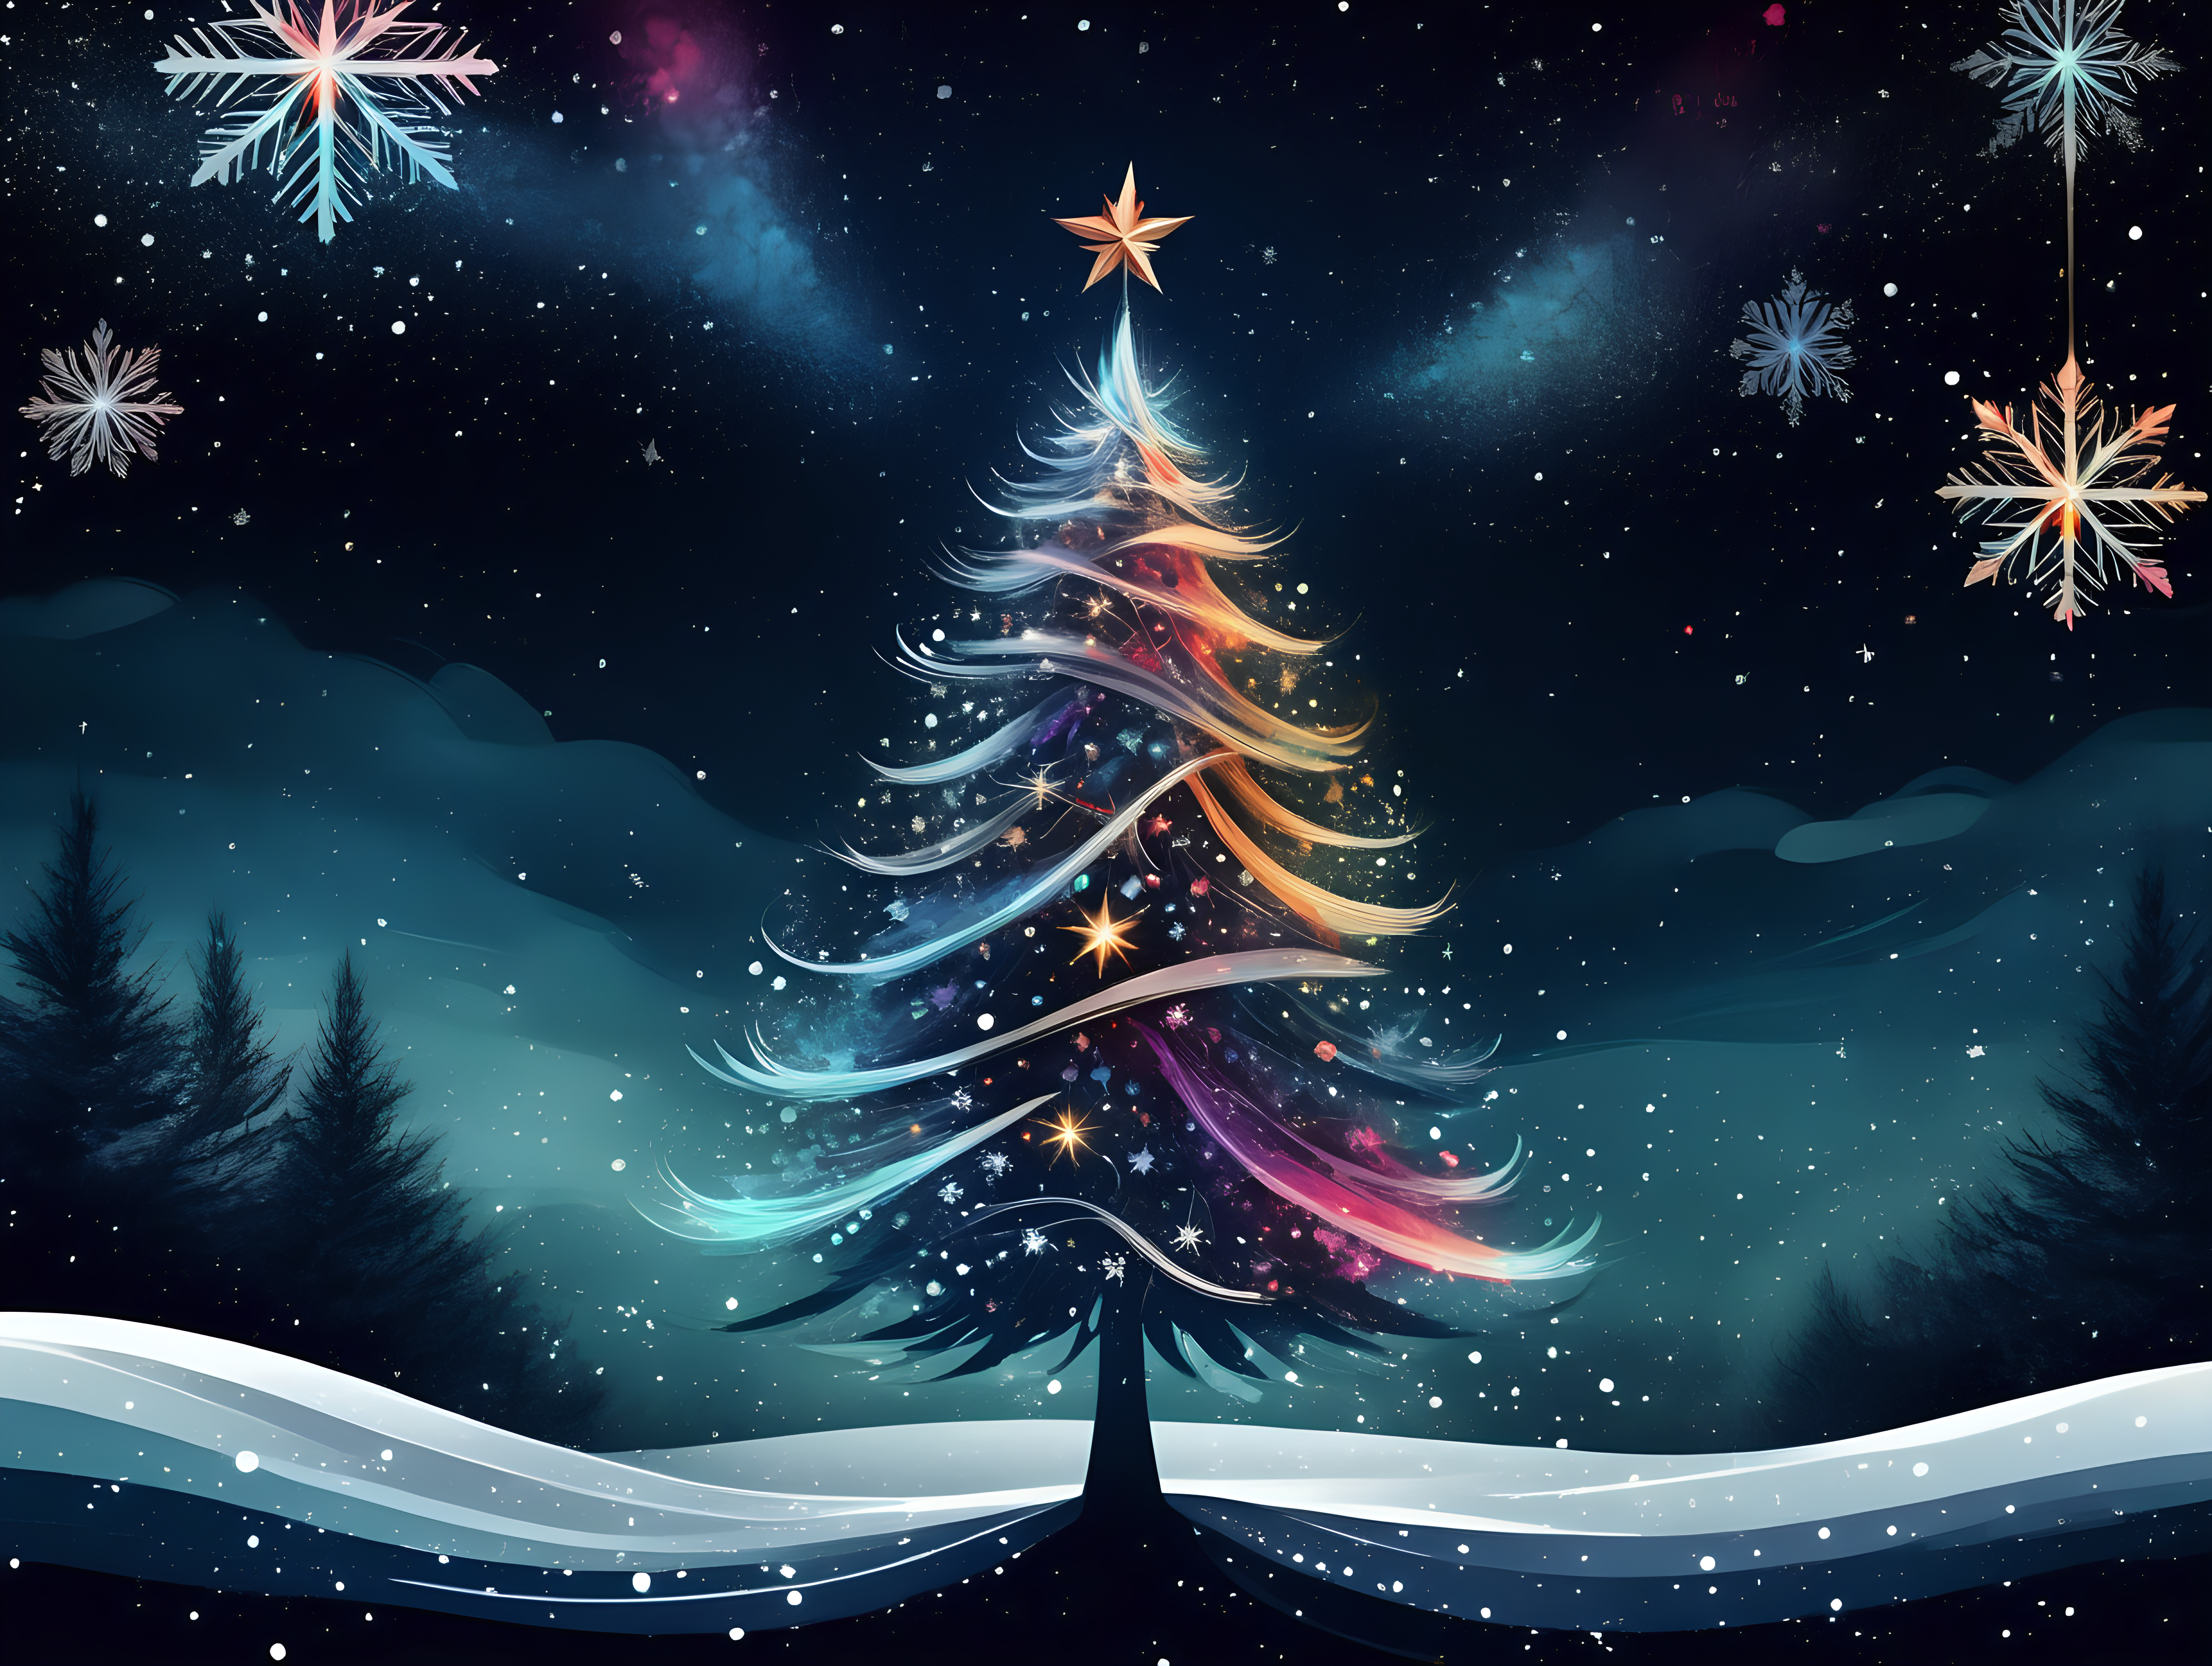 Christmas card no inscription featuring a Christmas tree